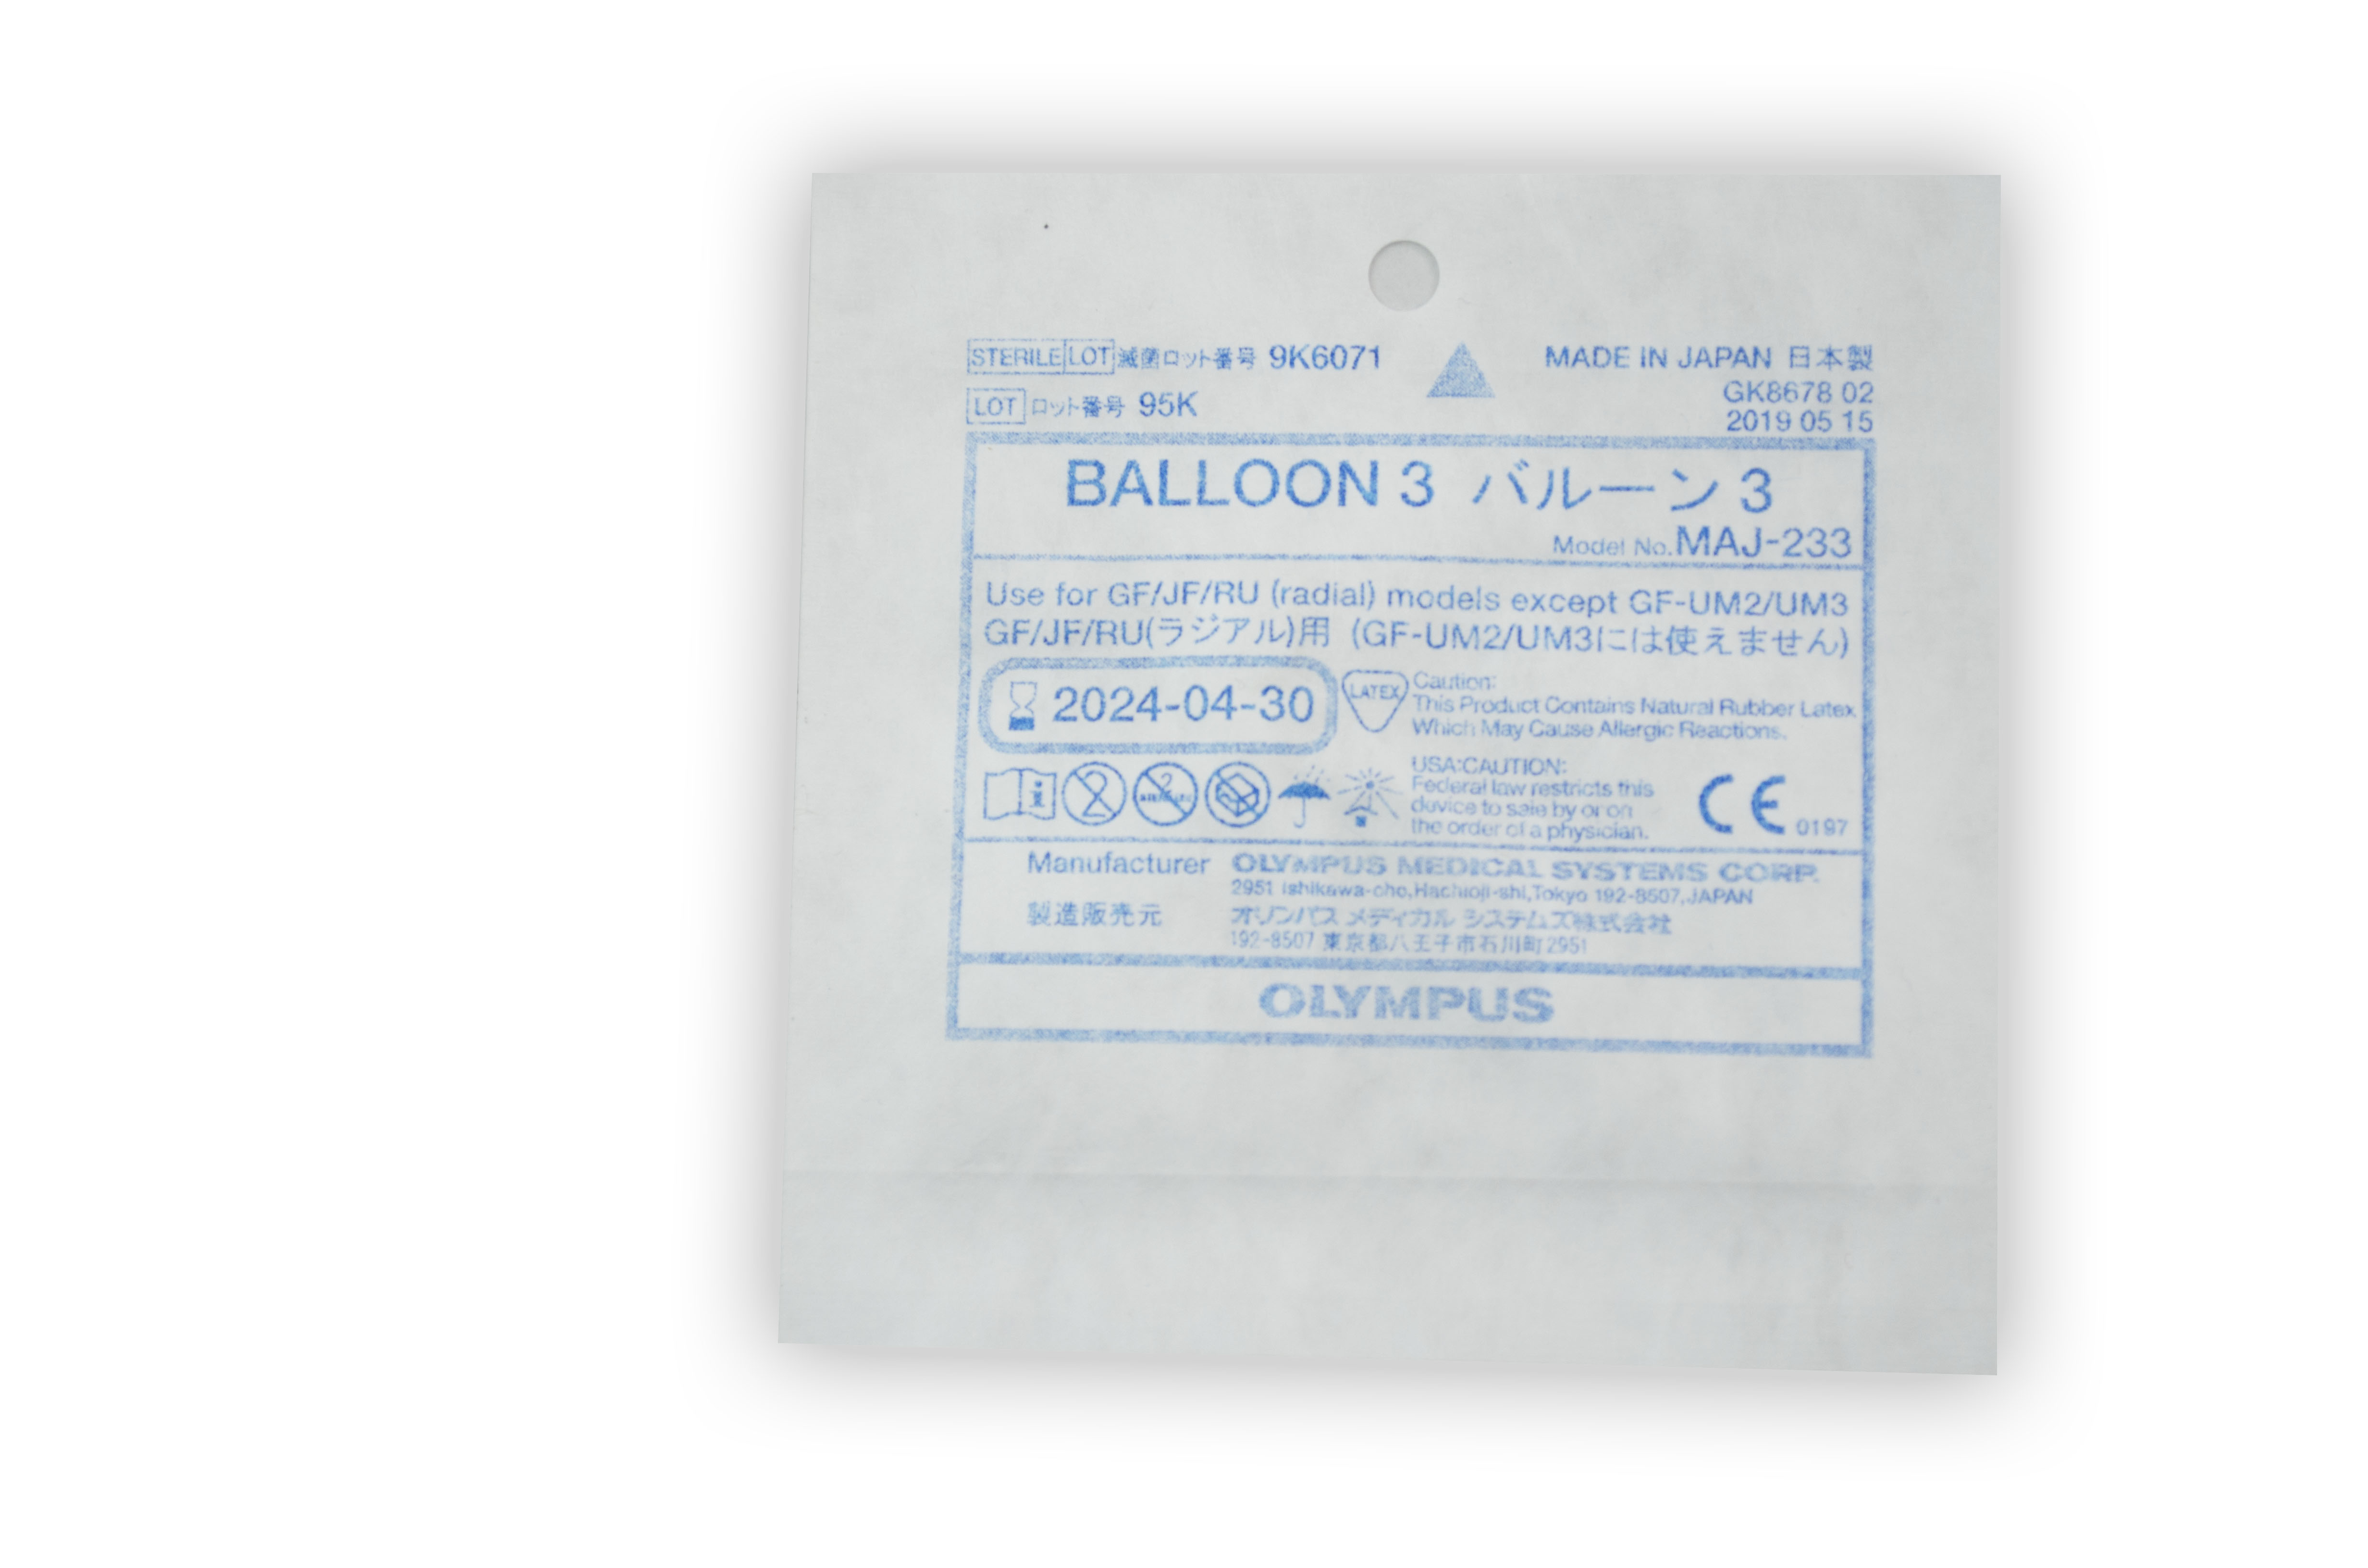 [In-Date] Olympus Disposable Balloon (Each) - MAJ-233 (Original Packaging)